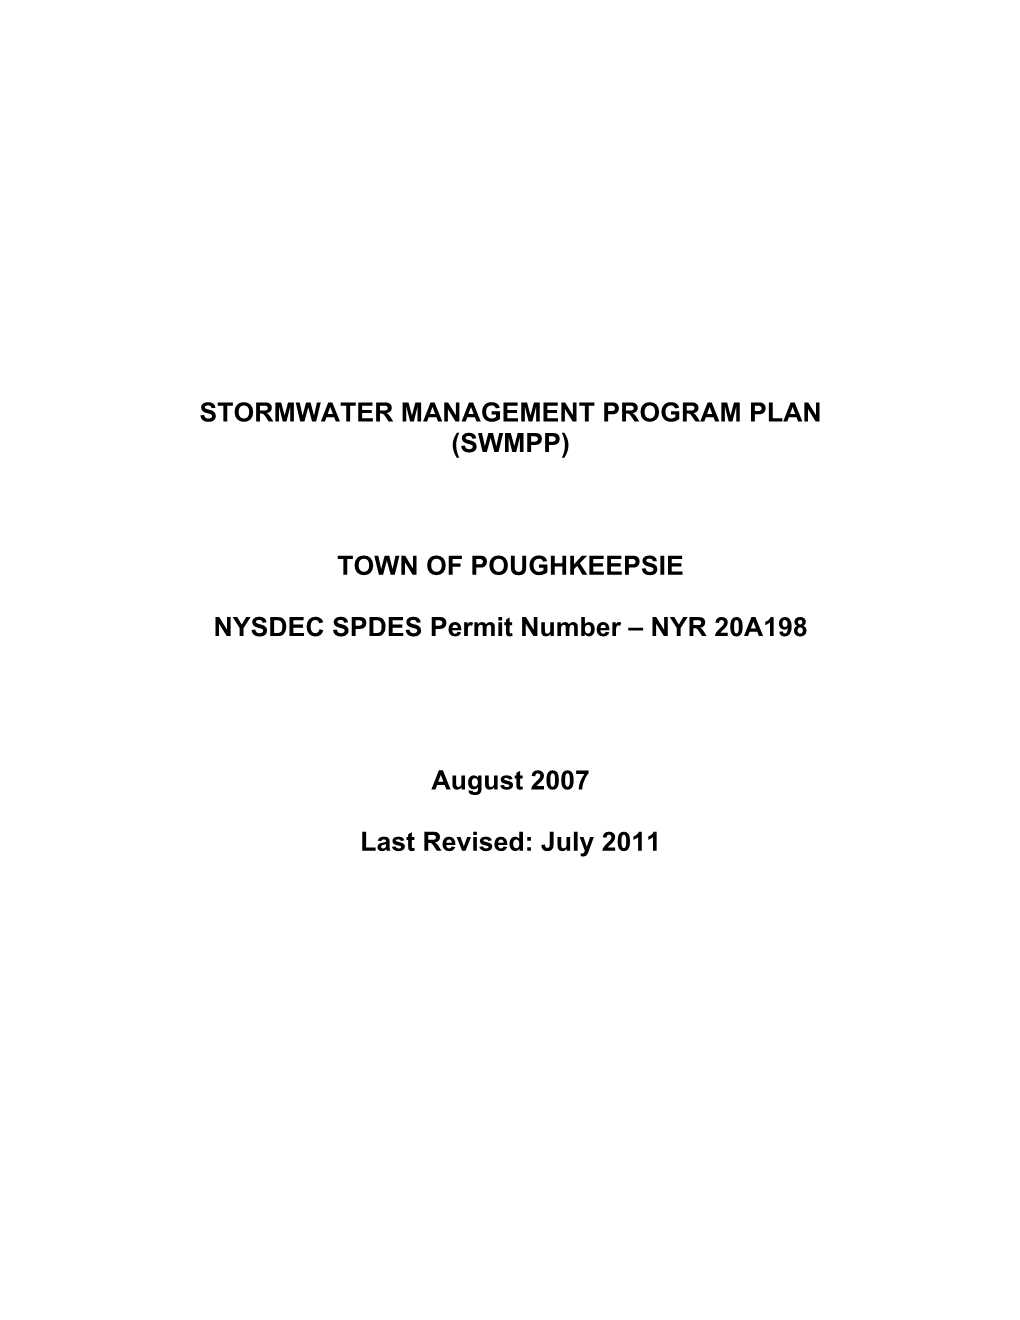 Stormwater Management Program Plan (Swmpp)